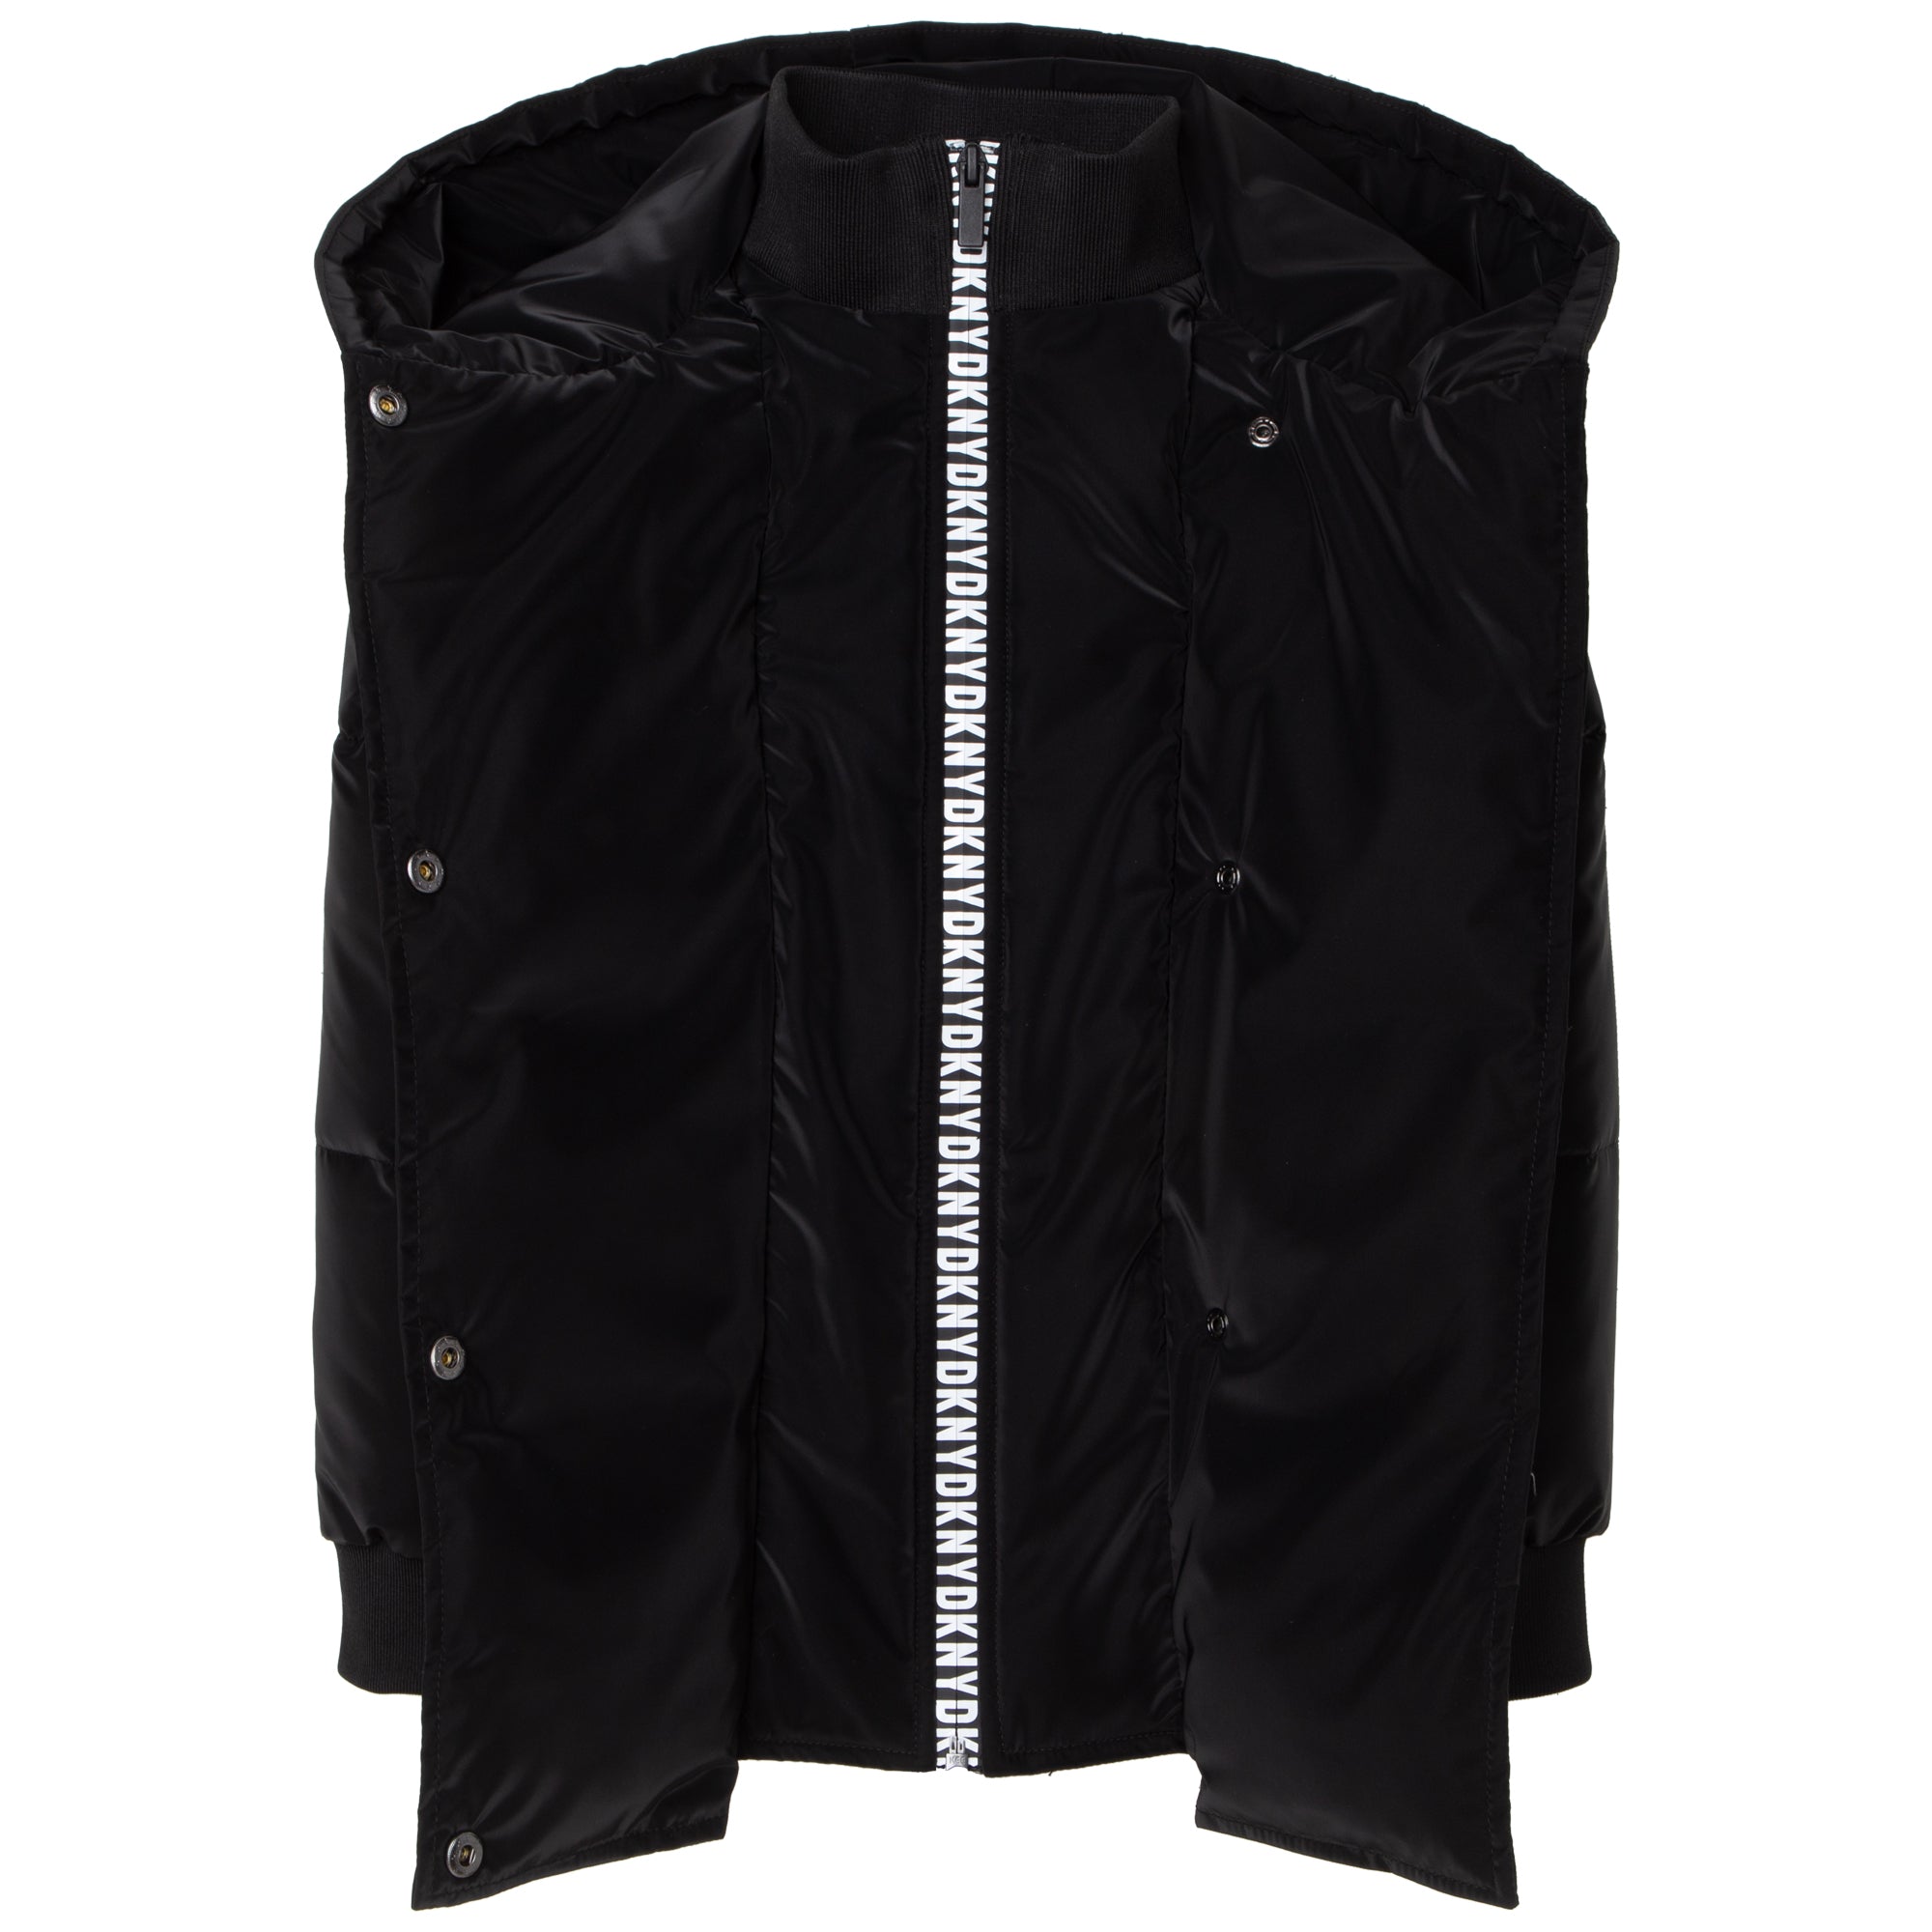 DKNY Girls Black Puffer Jacket